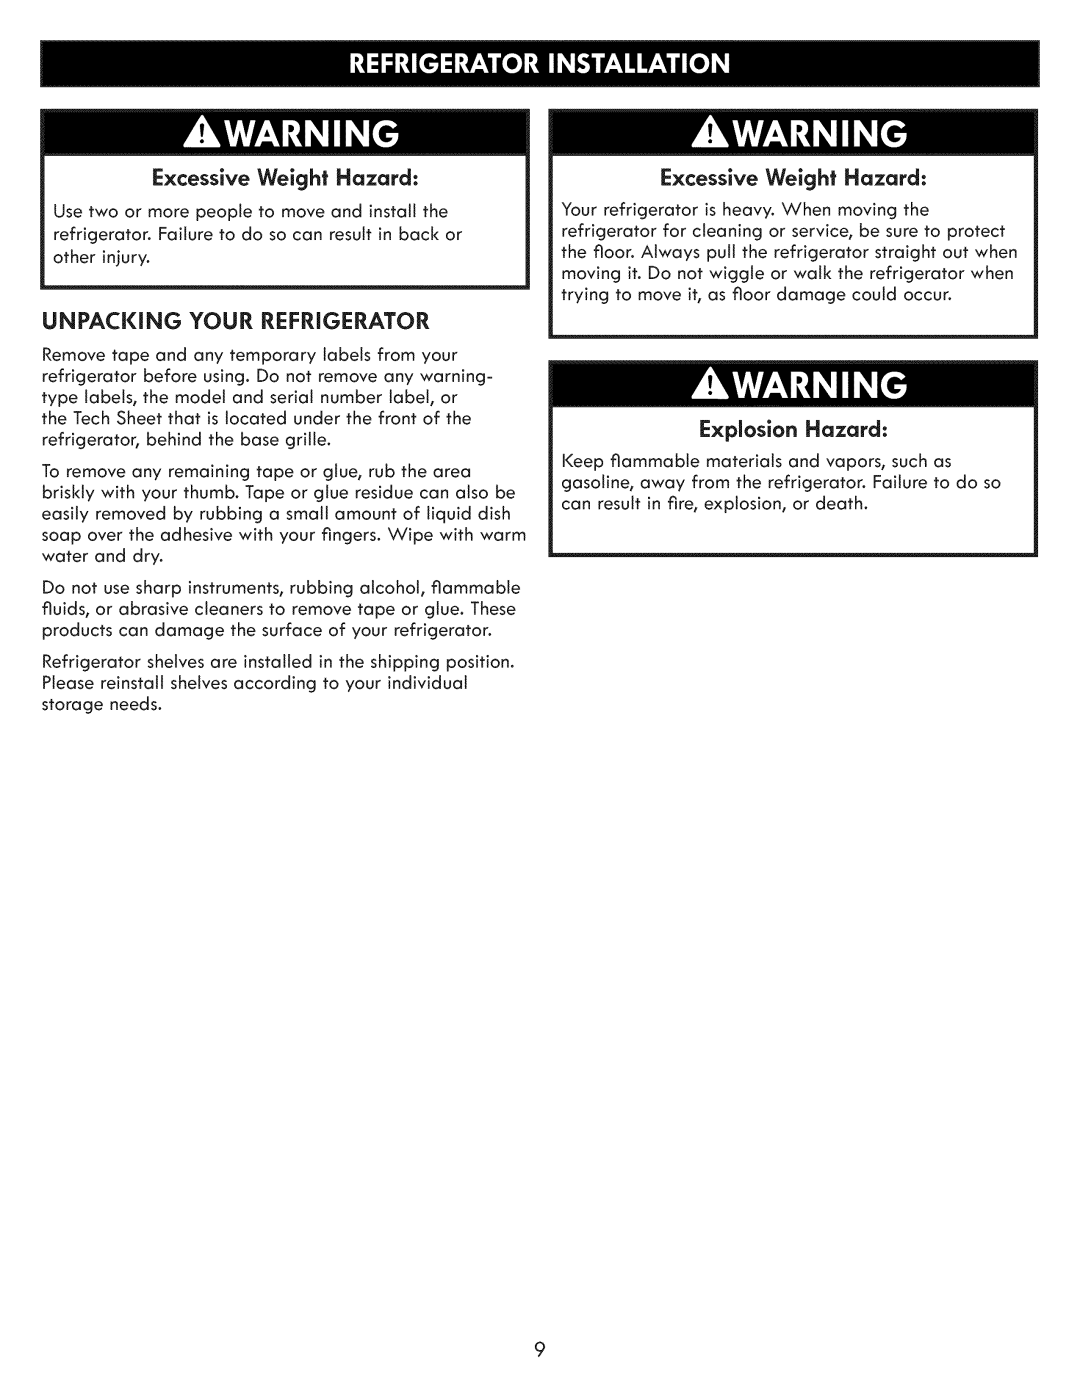 Kenmore 795.7202 manual Excessive Weight Hazard, Unpacking Your Refrigerator, Explosion Hazard 